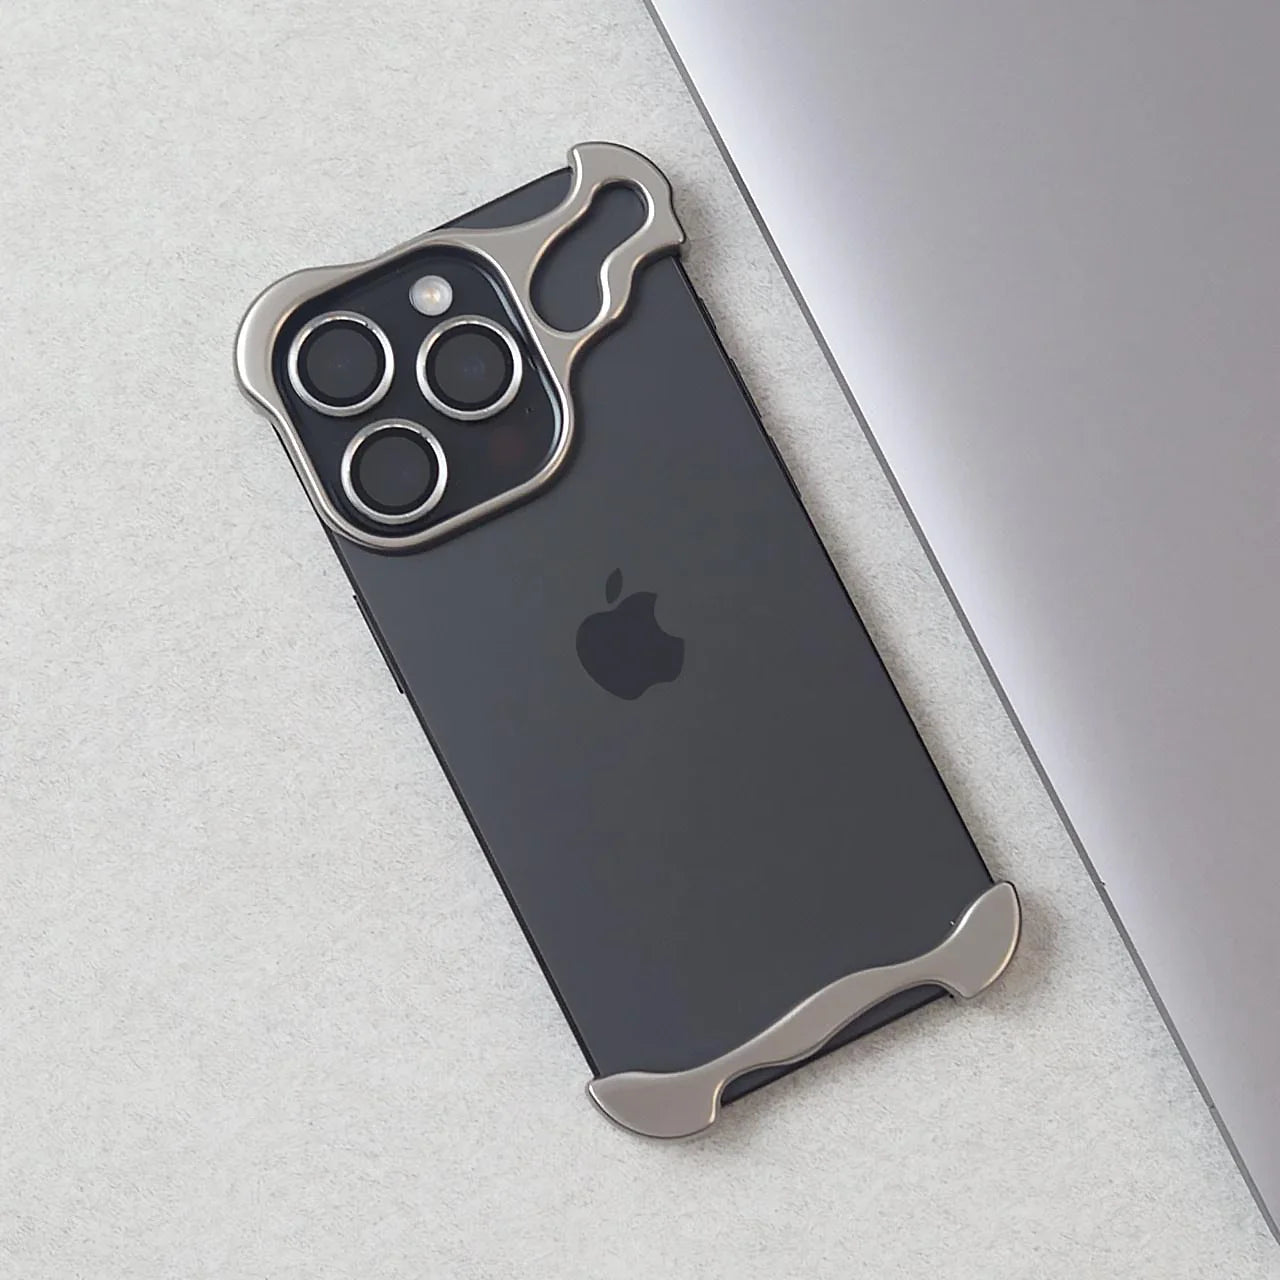 Aluminum Brass Knuckle Bumper,metal Knuckle Case for iPhone 6